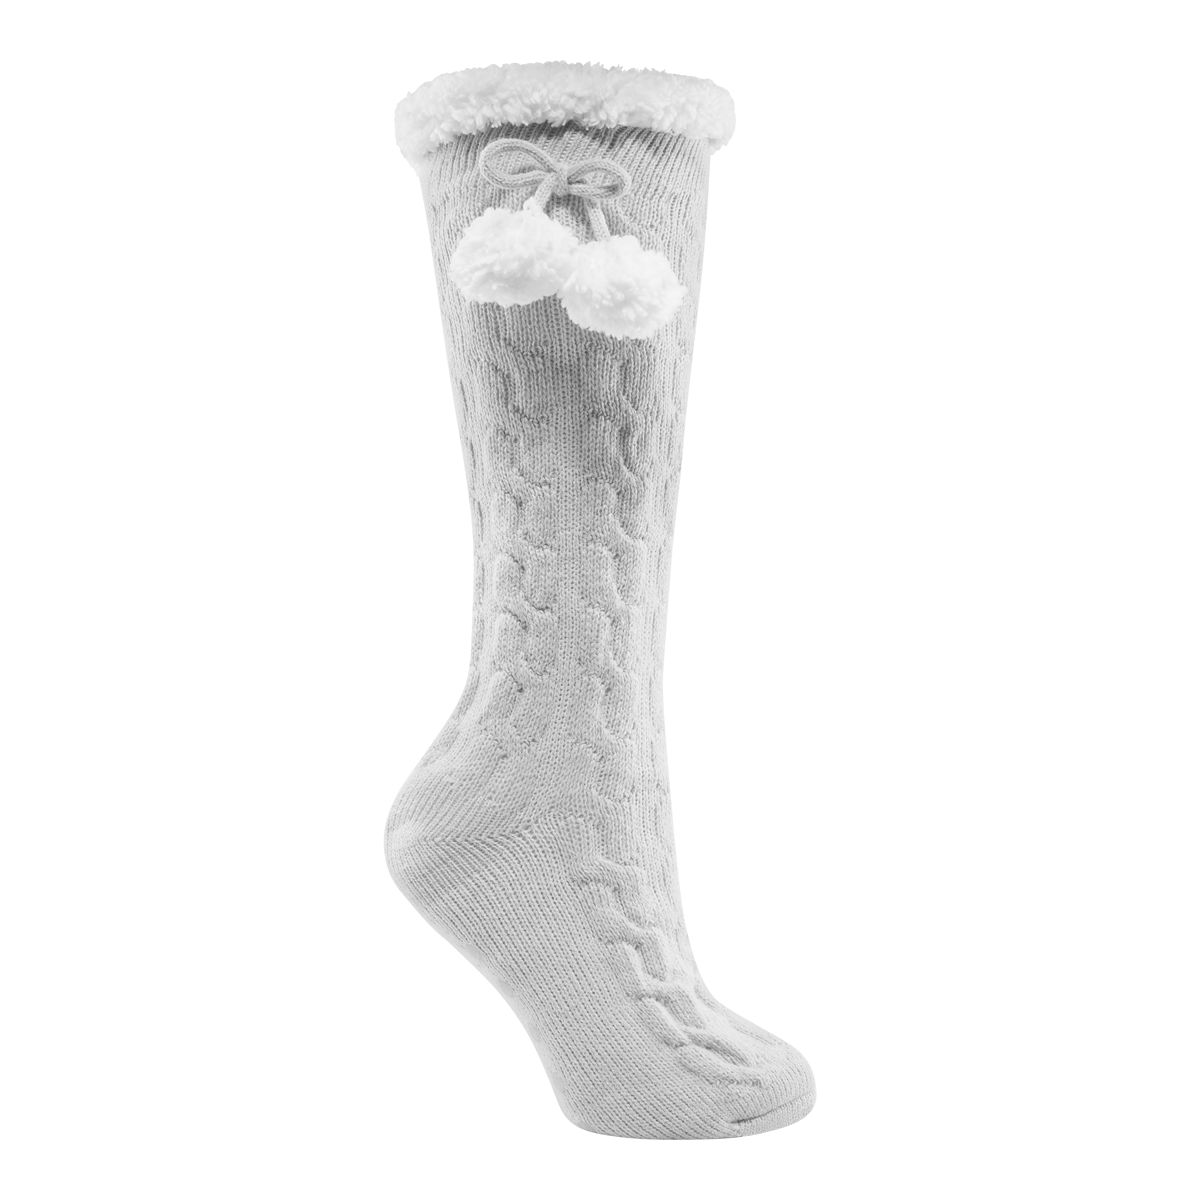 Ripzone Women's Reading Winter Socks Plush Non-Slip